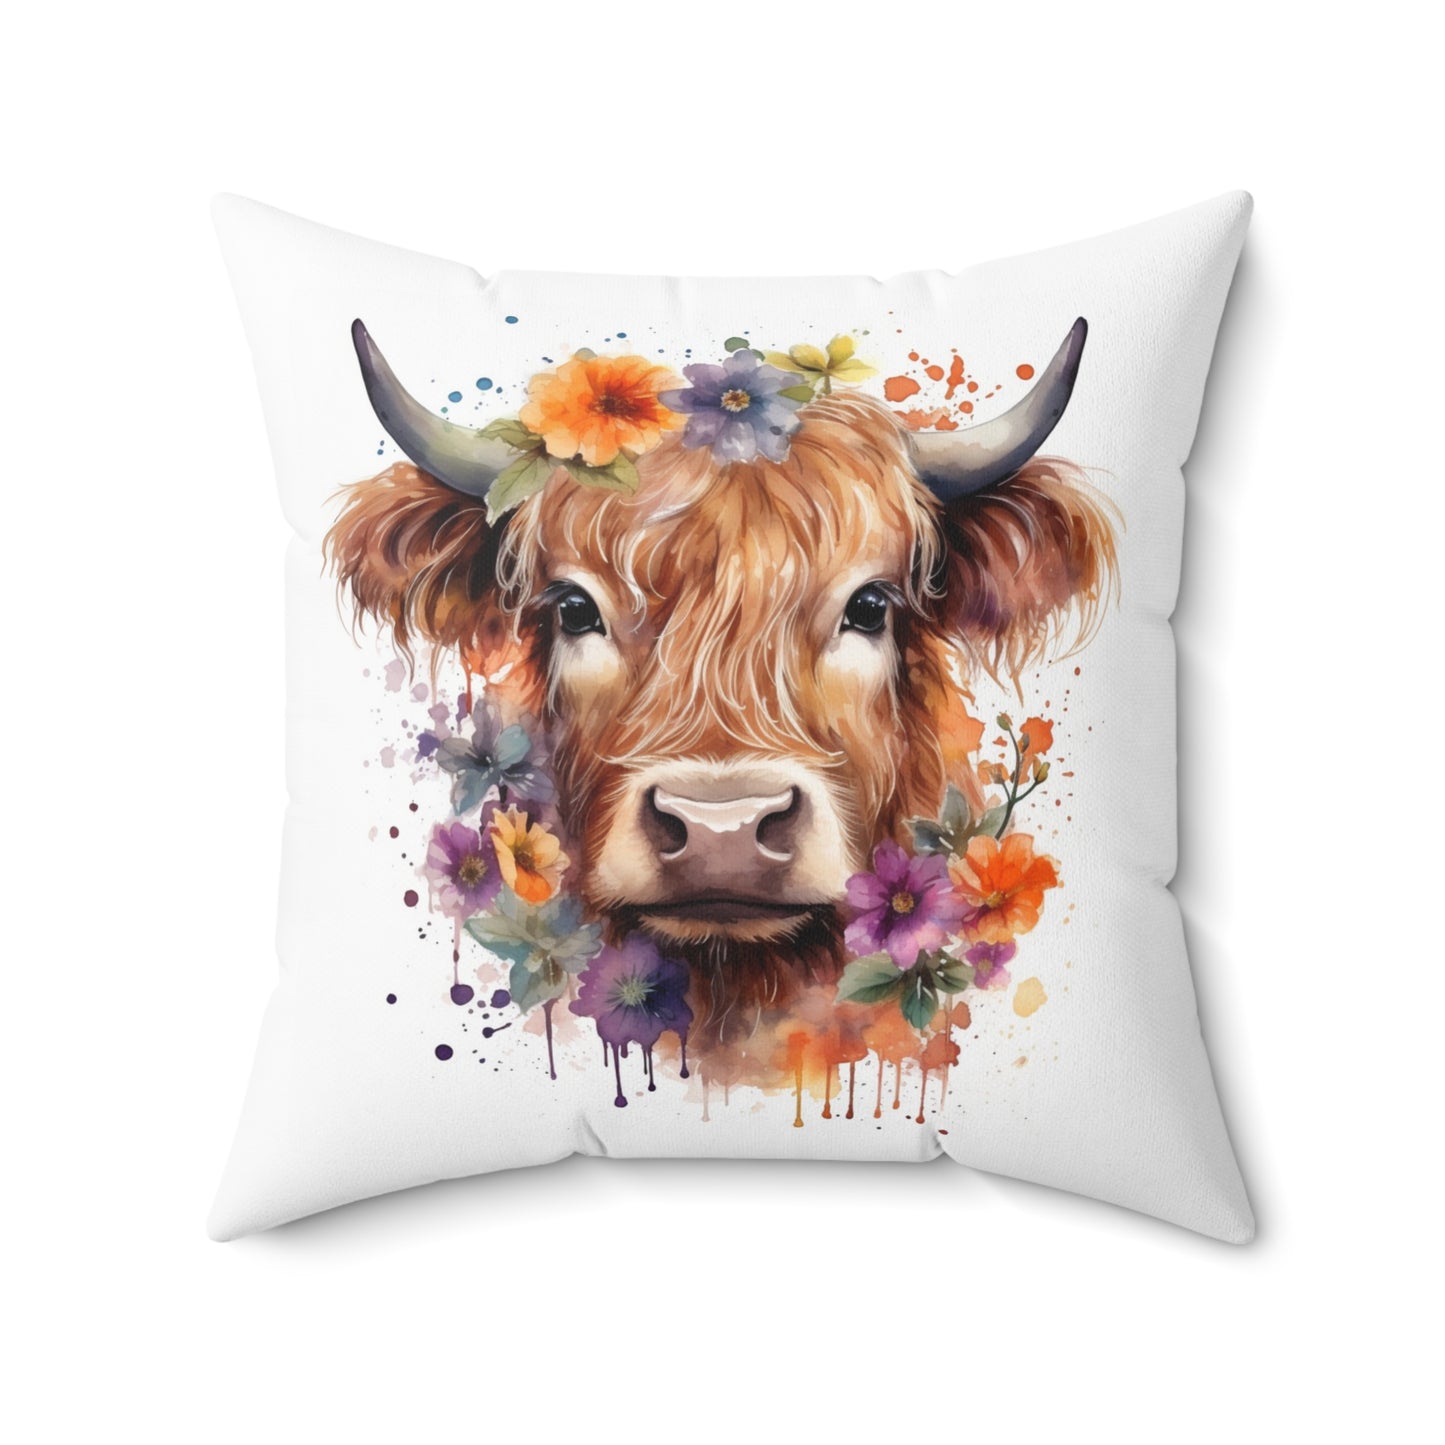 Farmhouse Highland Cow Square Throw Pillow